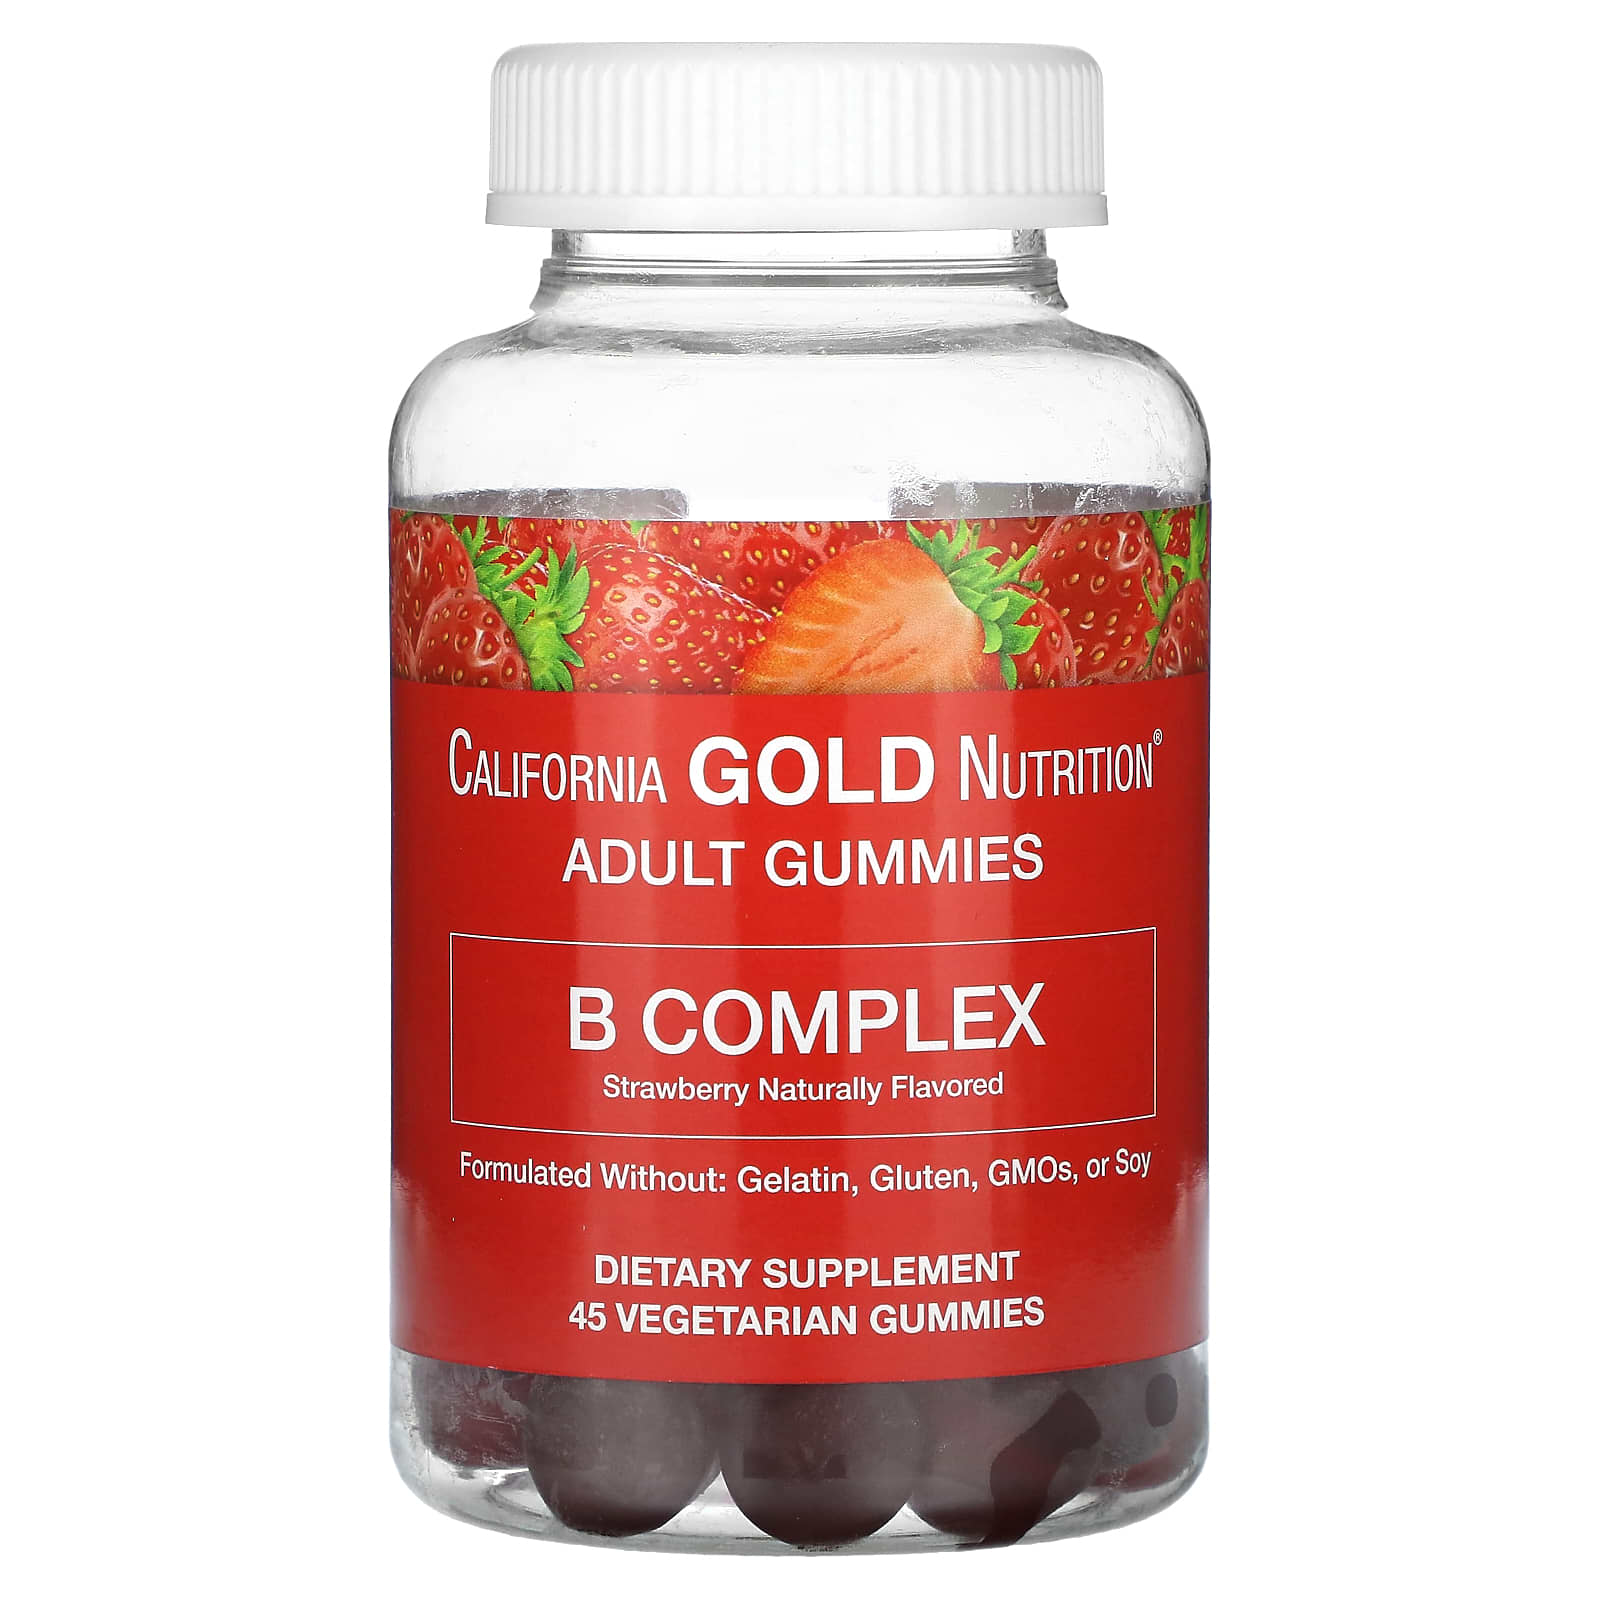 California Gold Nutrition-B Complex Gummies-No Gelatin-Natural Strawberry Flavor-45 Gummies